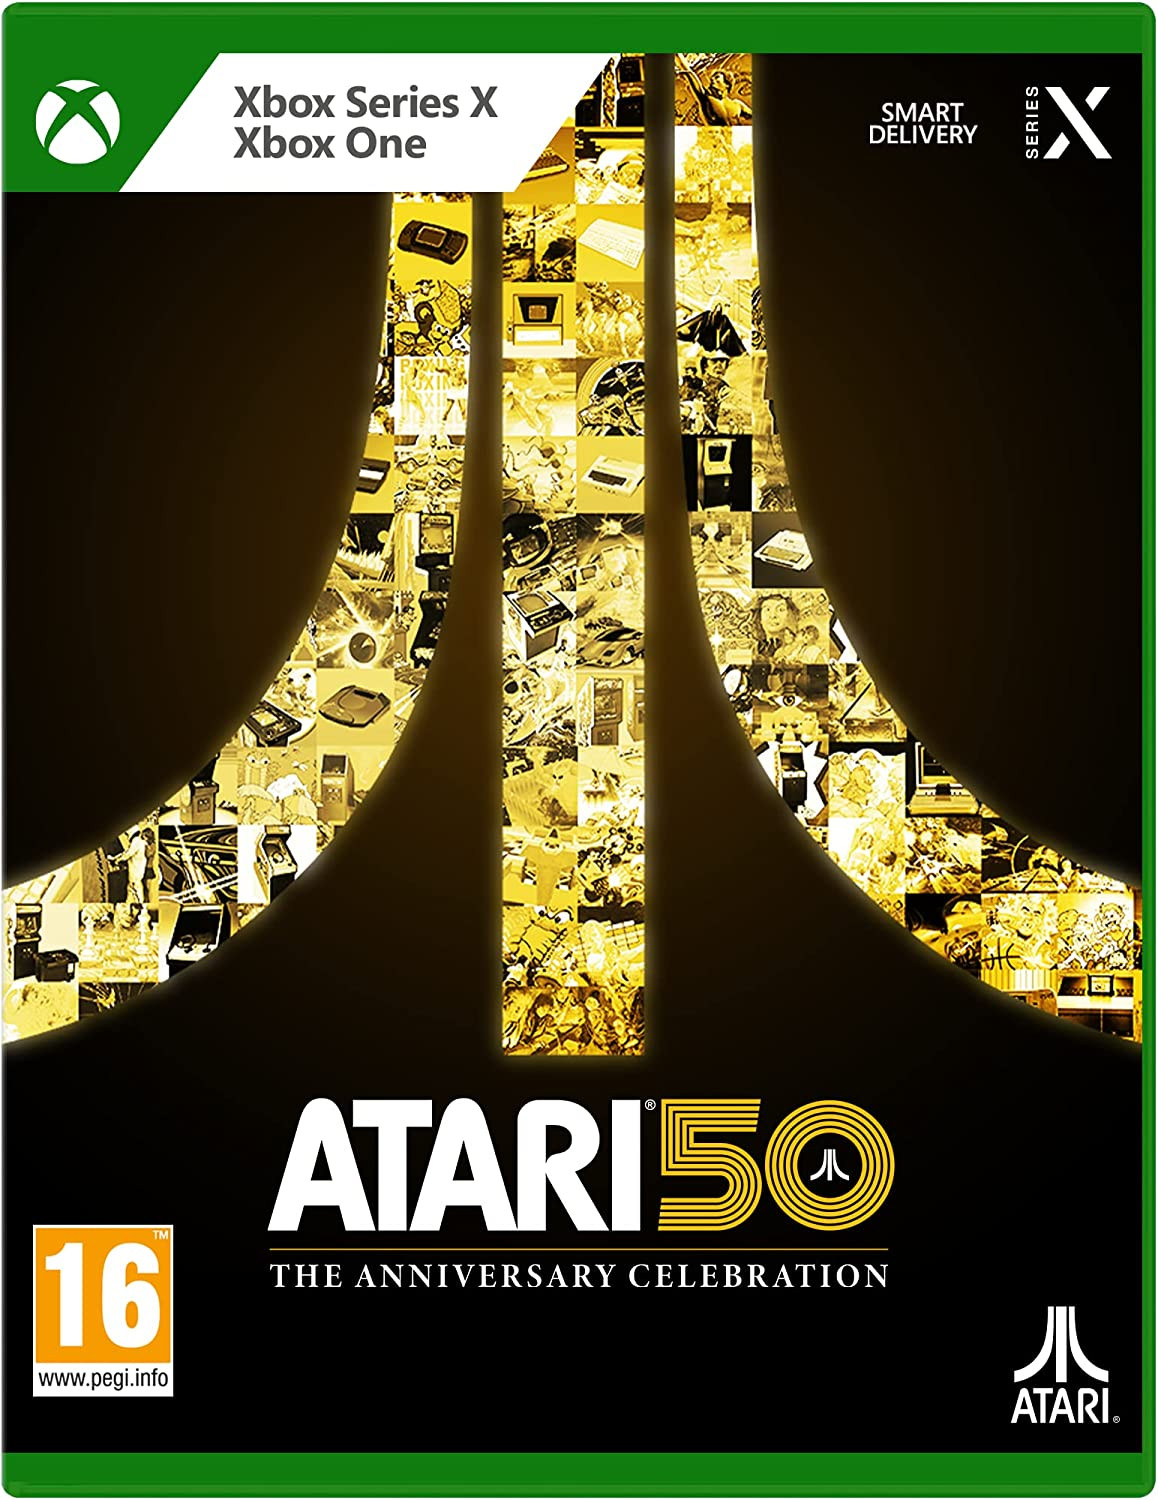 Atari 50: The Anniversary Celebration (Xbox One), Atari